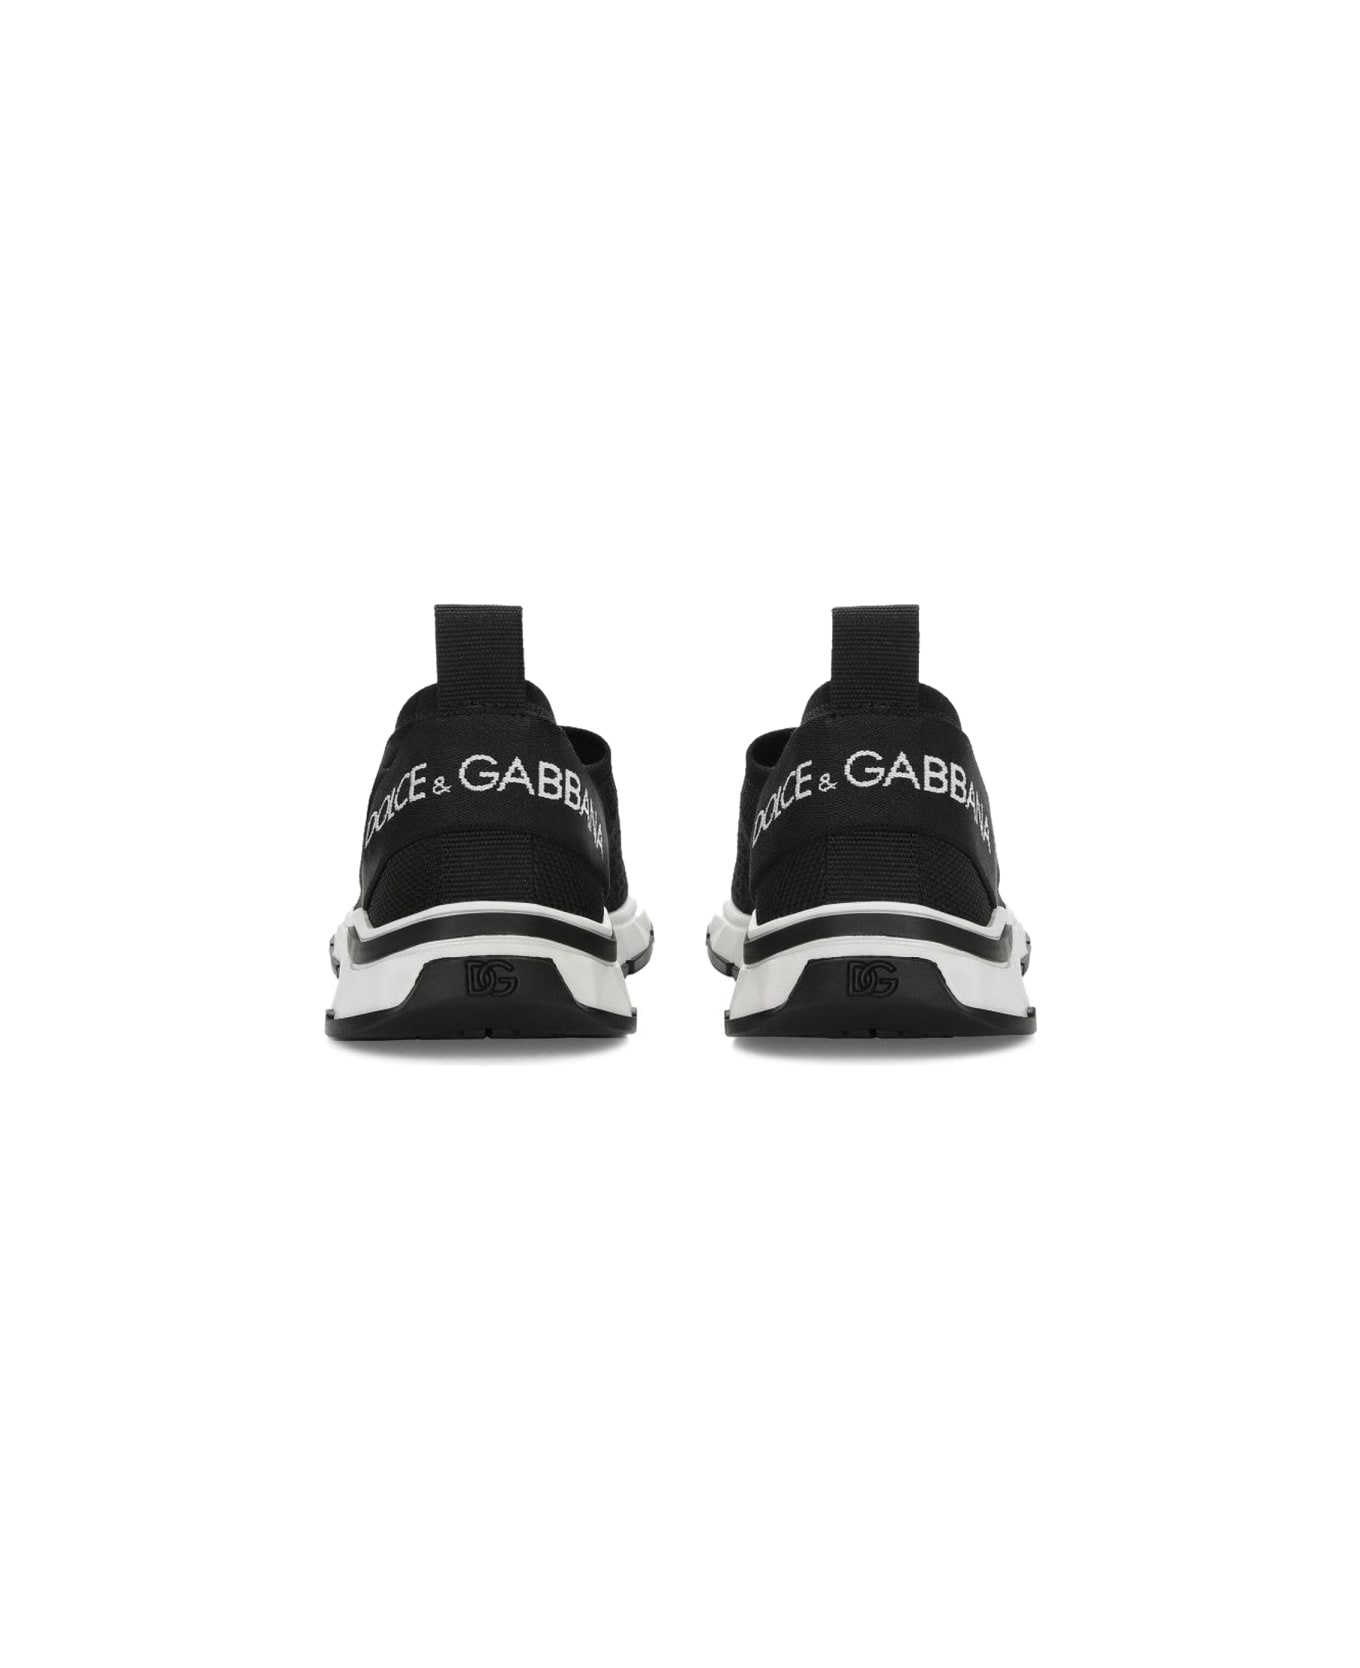 Dolce & Gabbana Roma Slip-on Sneakers - BLACK シューズ